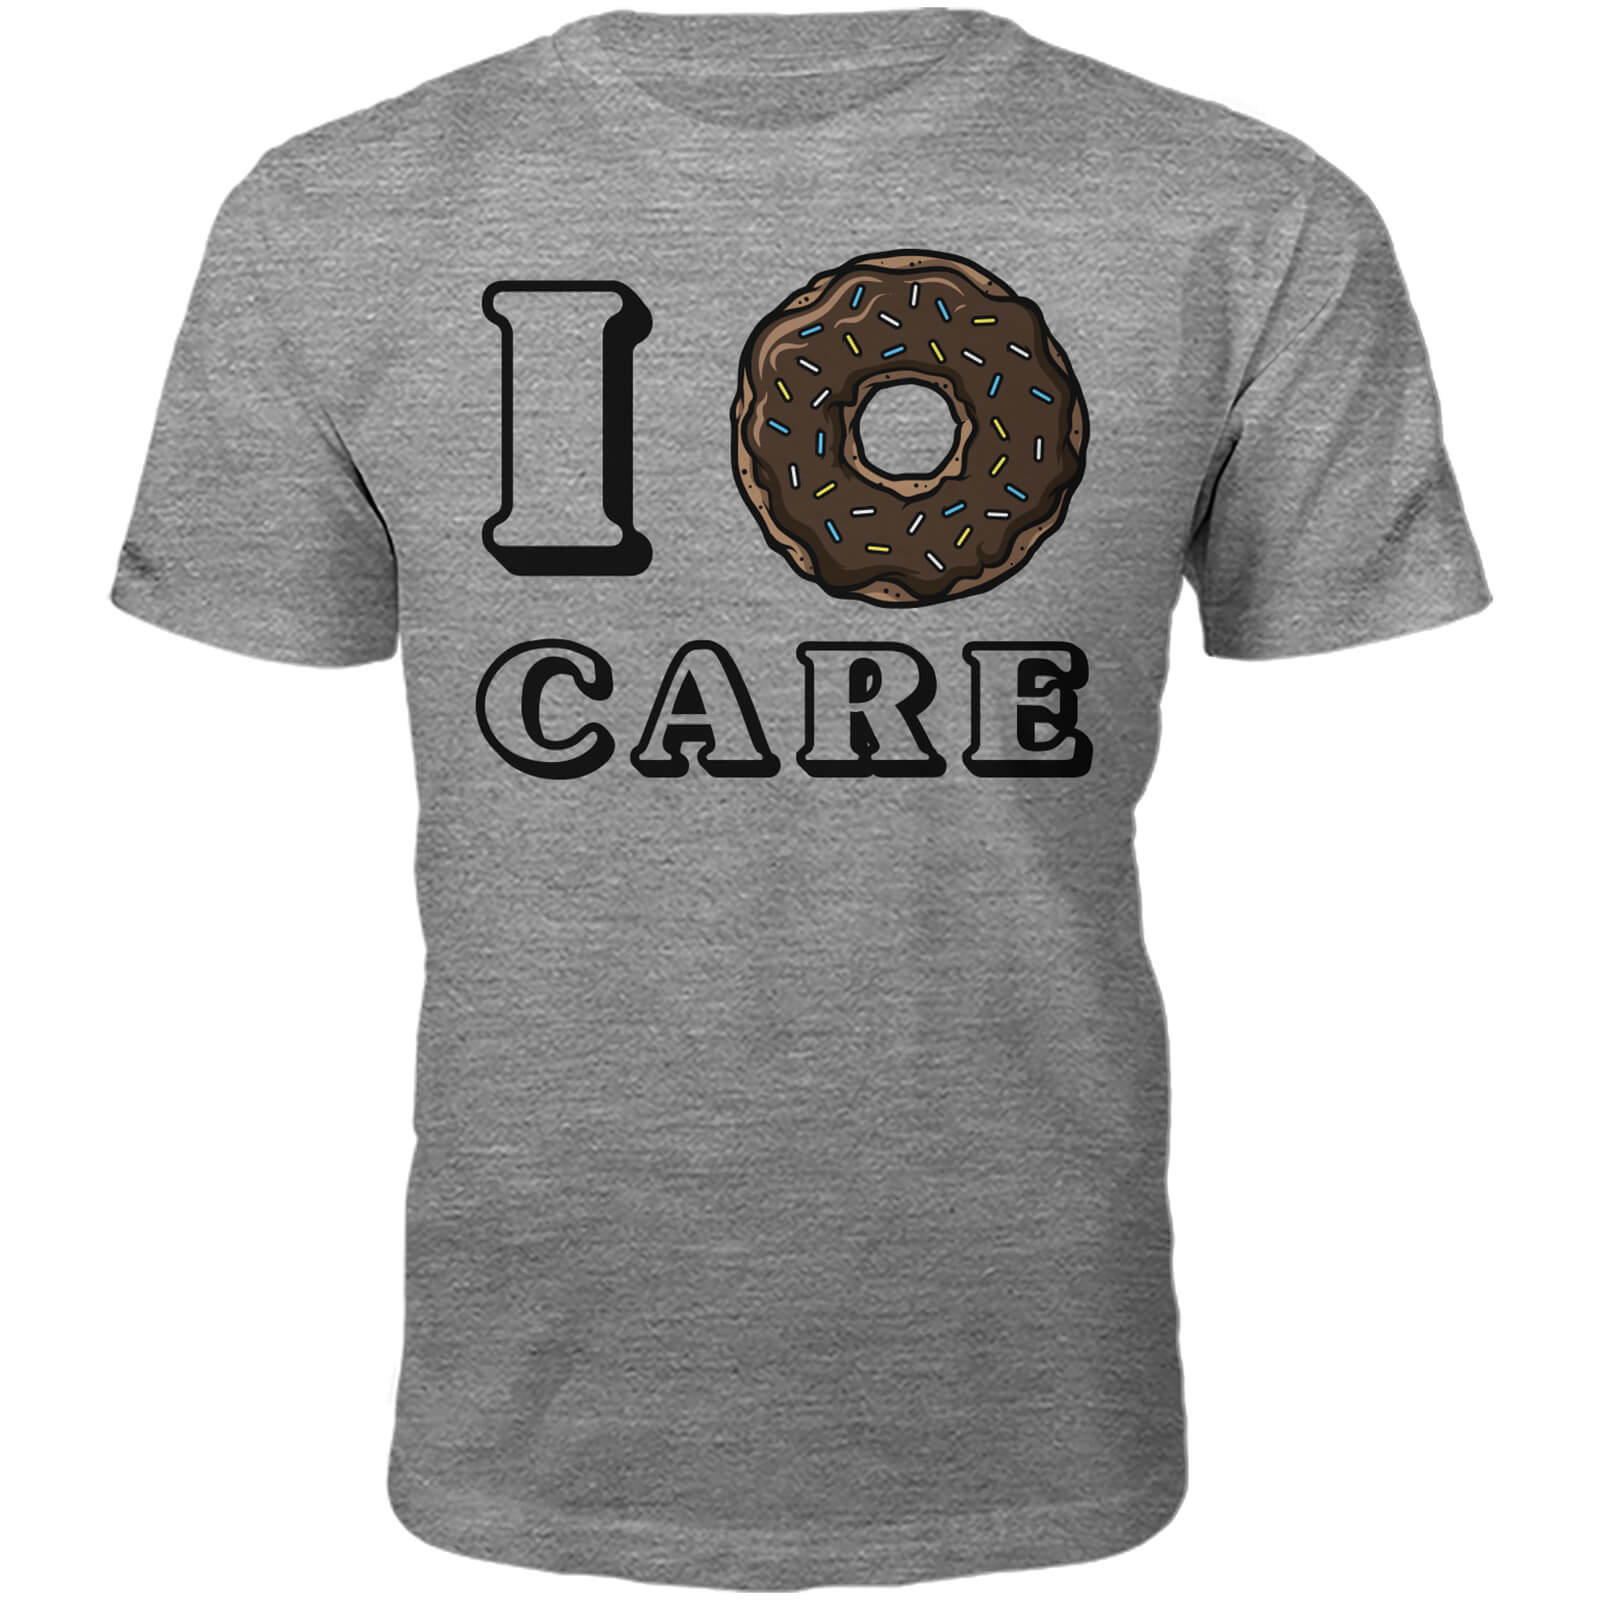 I Donut Care Slogan T-Shirt - Grey - S - Grey